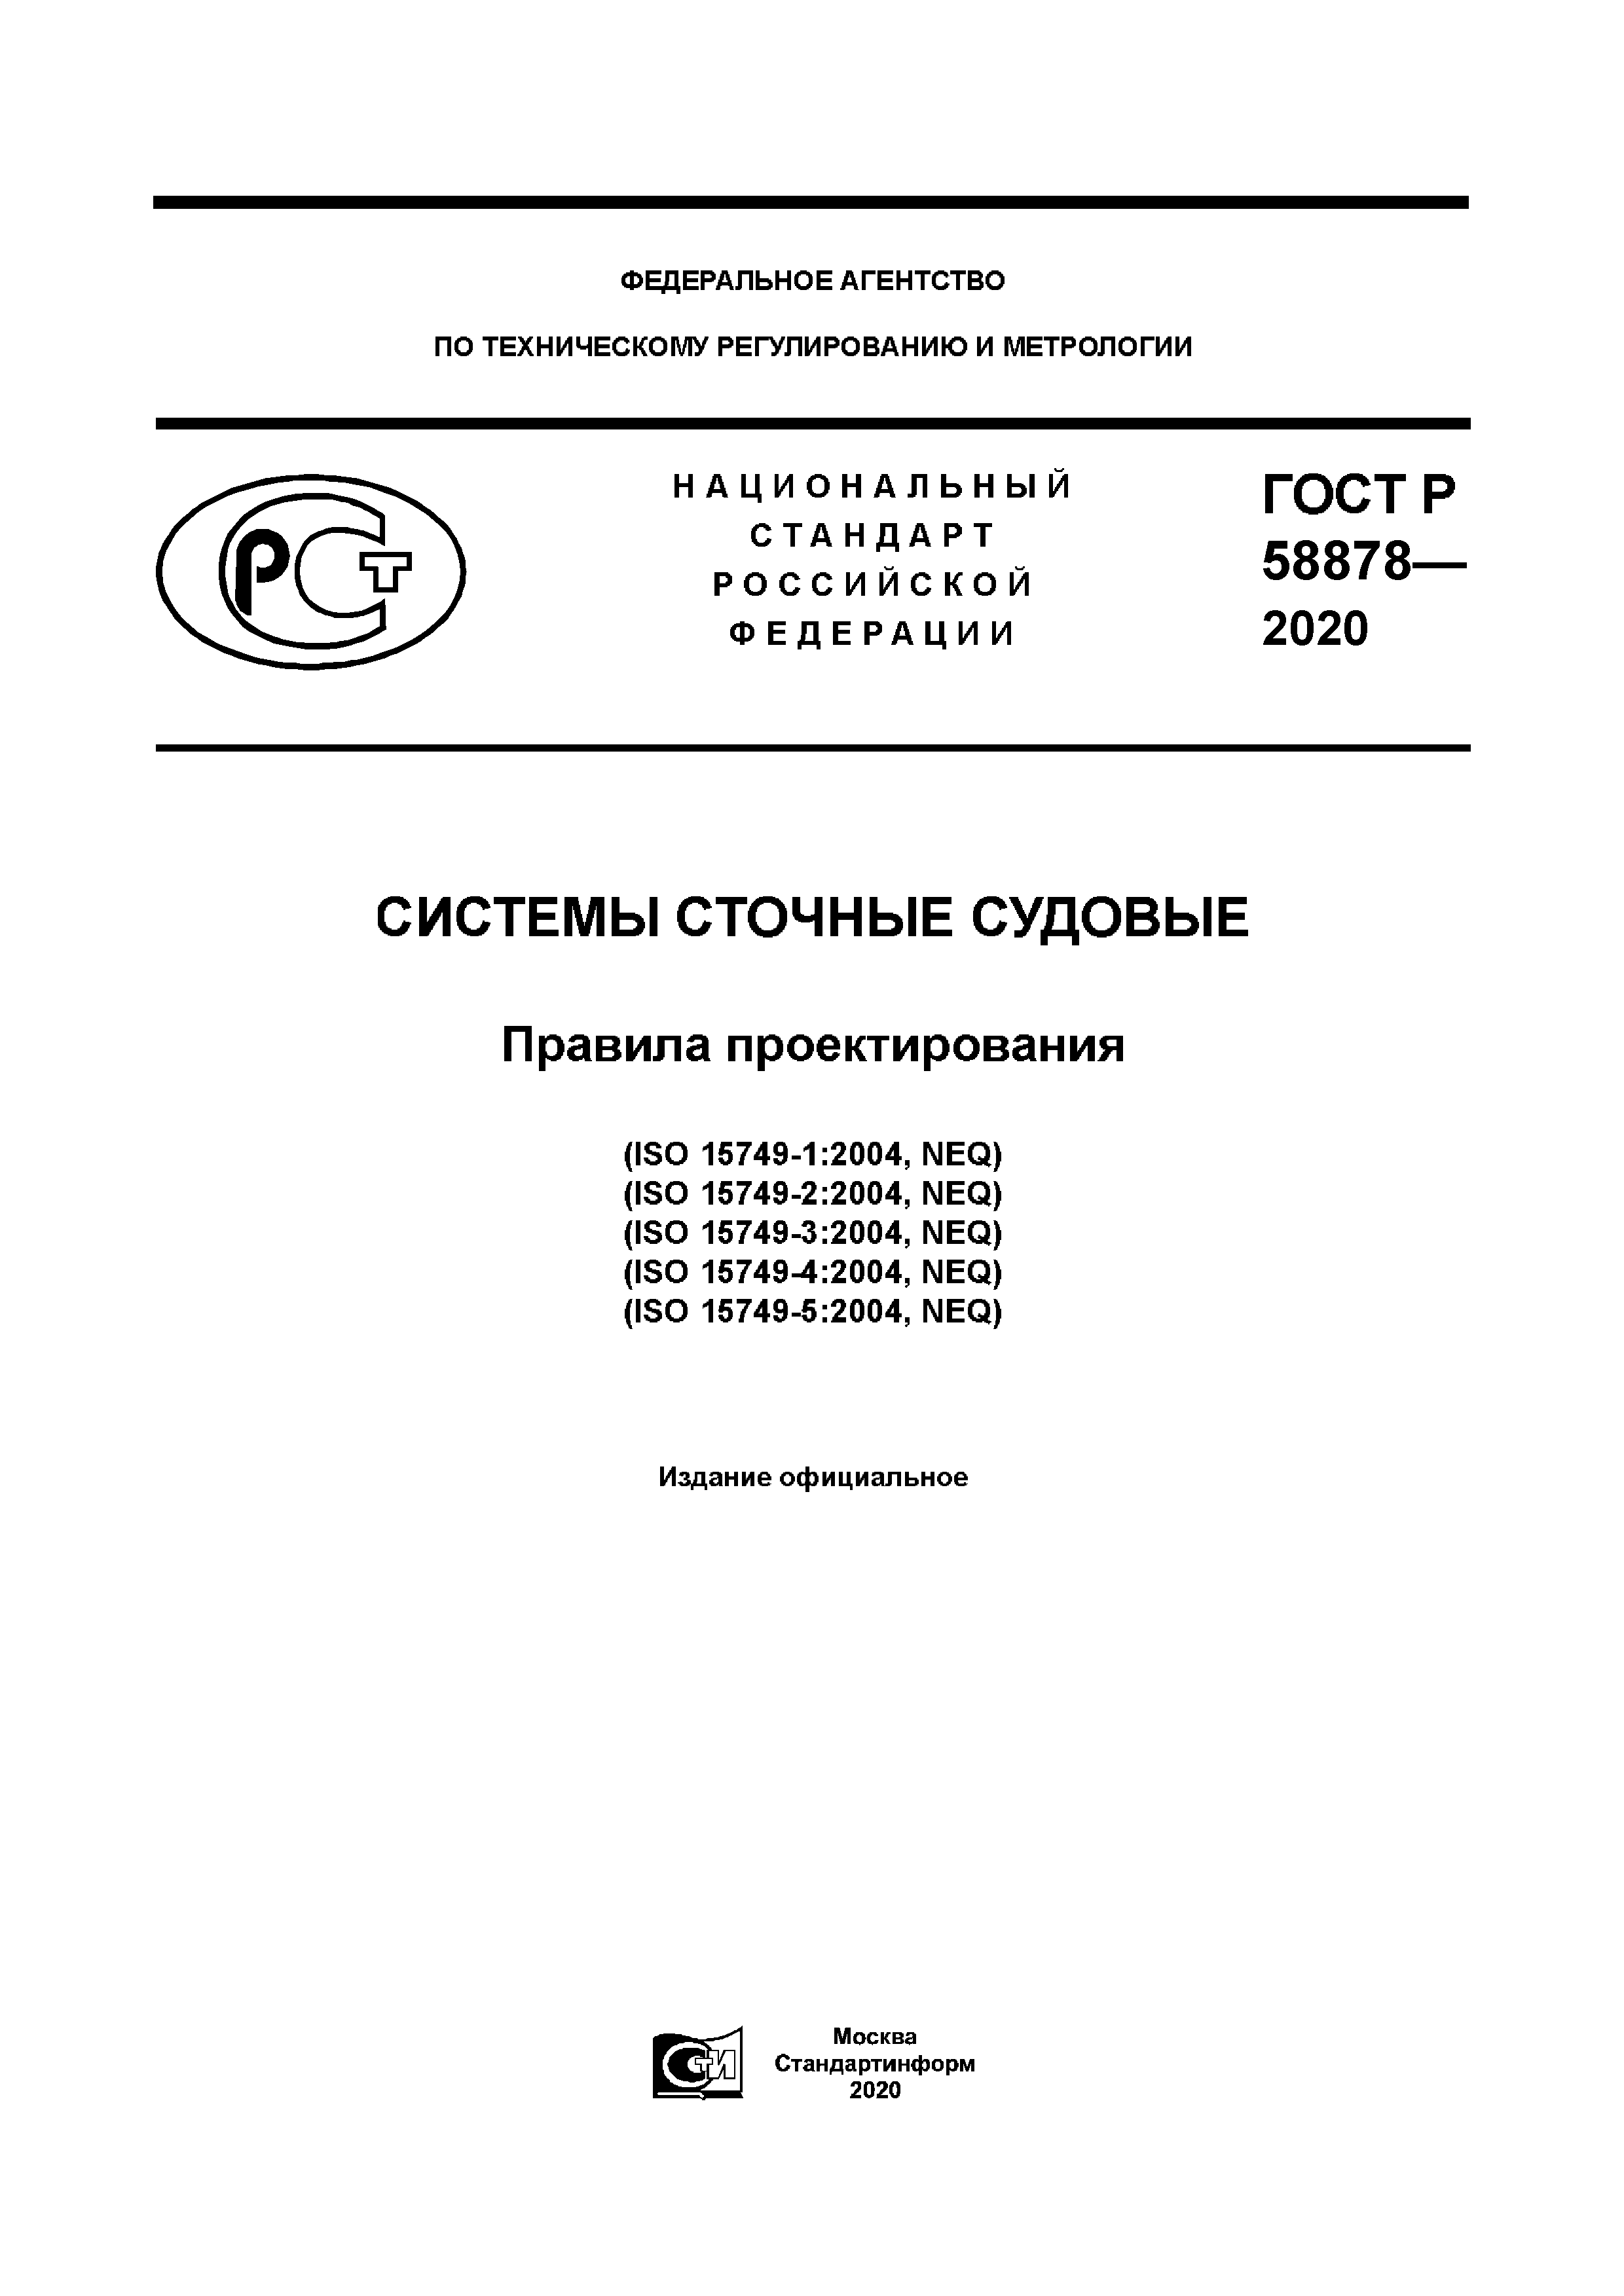 ГОСТ Р 58878-2020